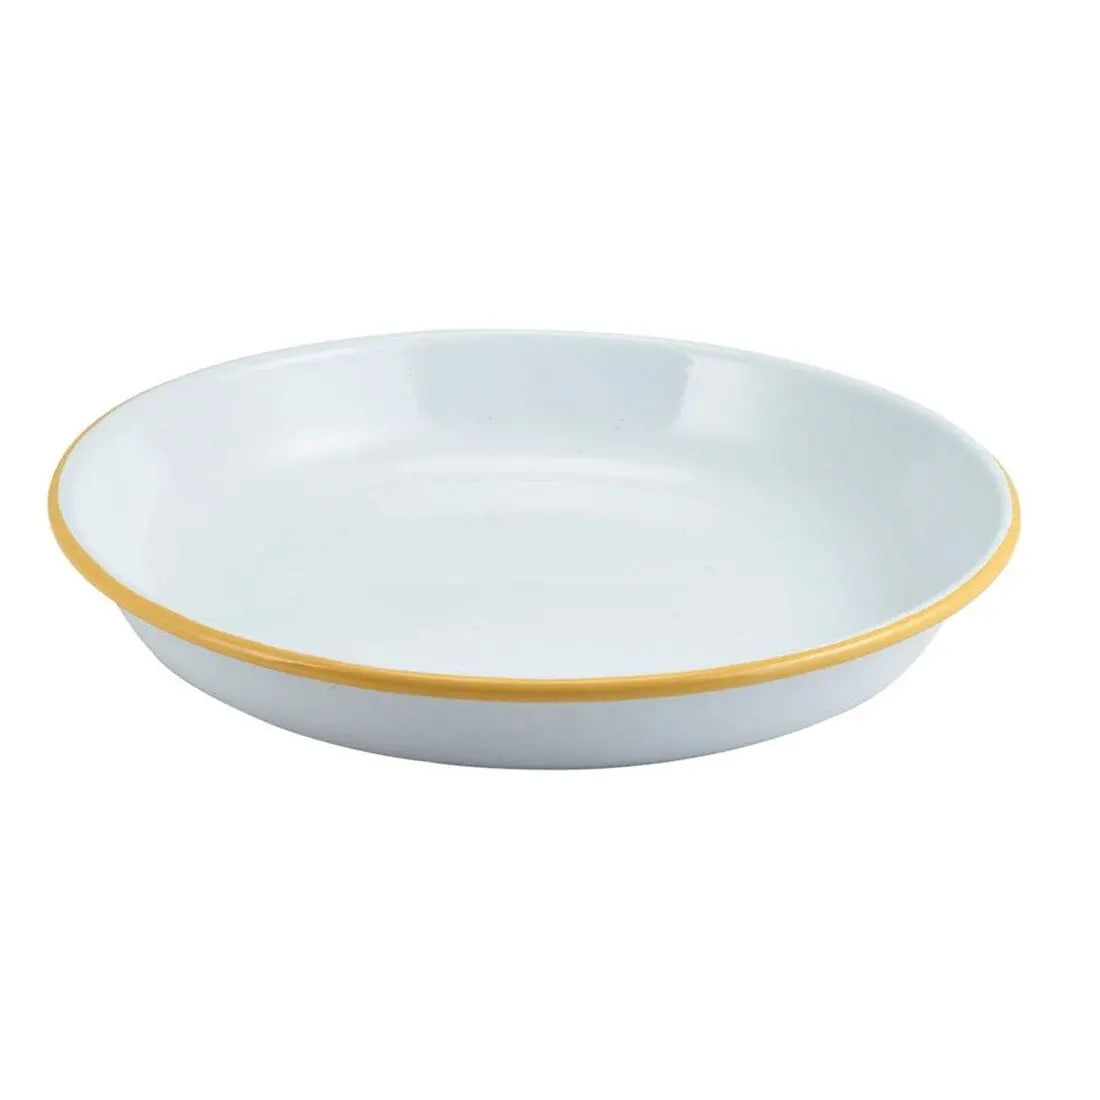 Personalised Favourite Food Enamel Bowl Enamel - White with Yellow Rim  